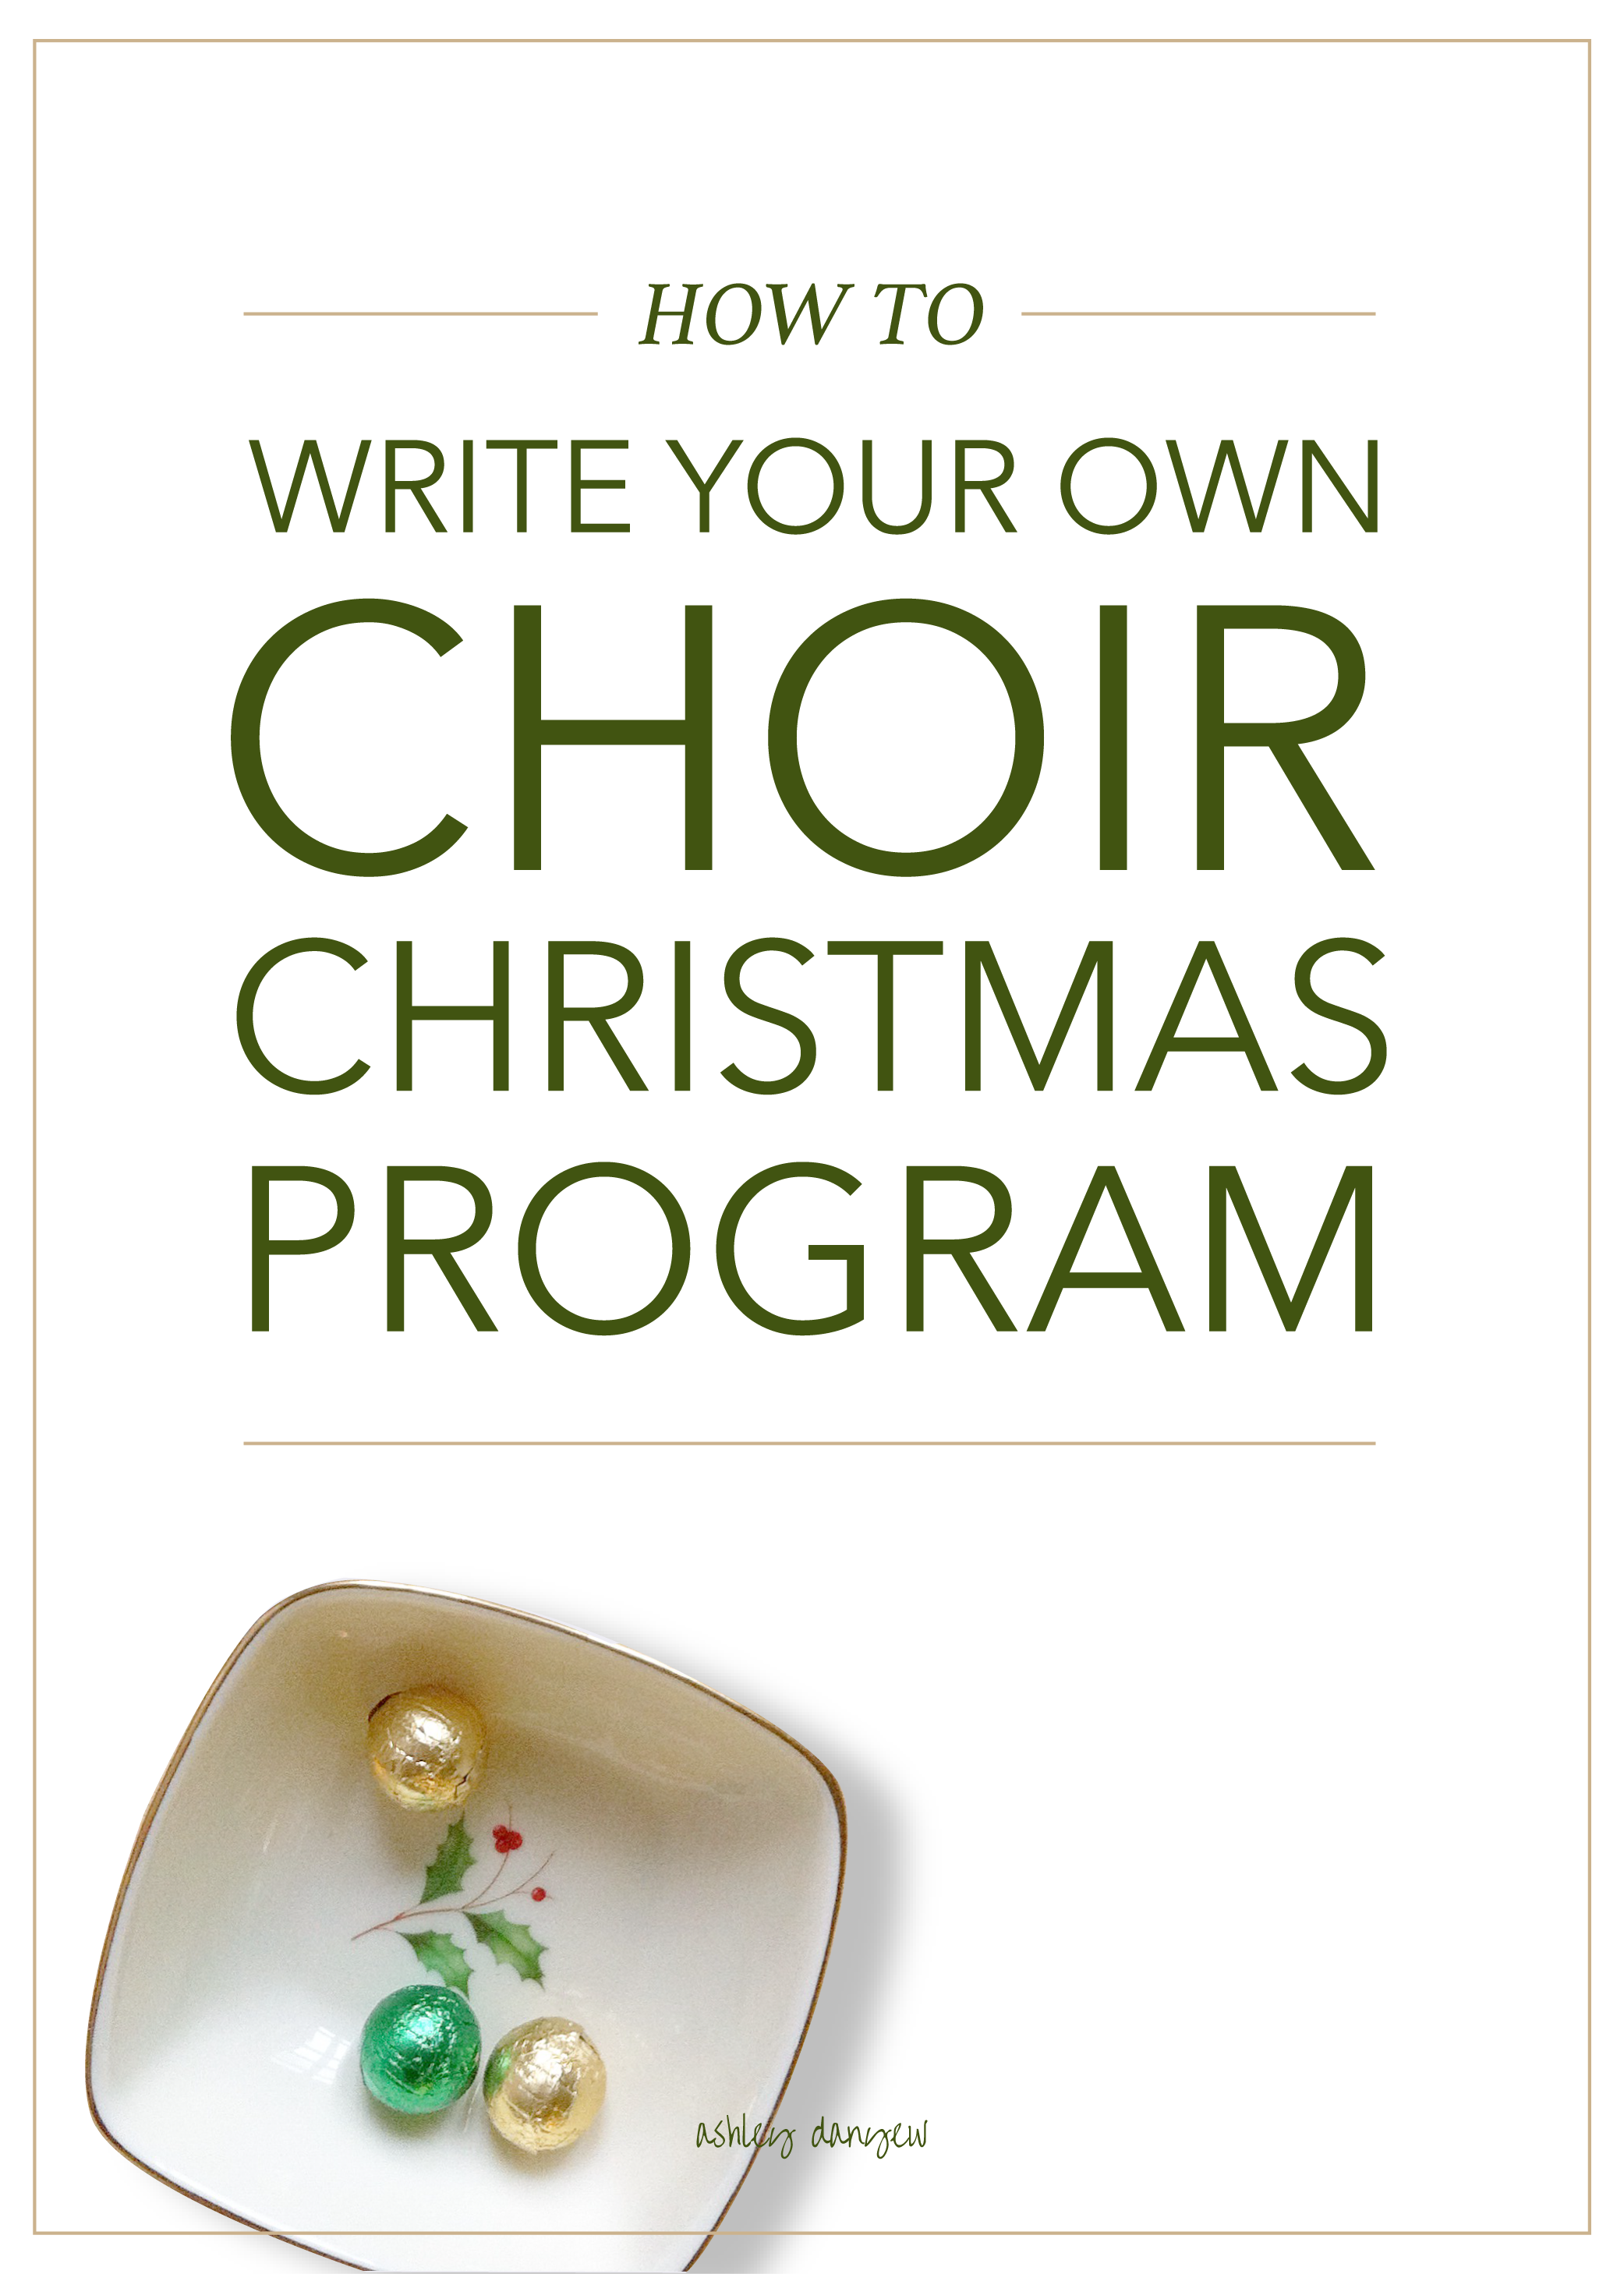 Copy of How to Write Your Own Choir Christmas Program